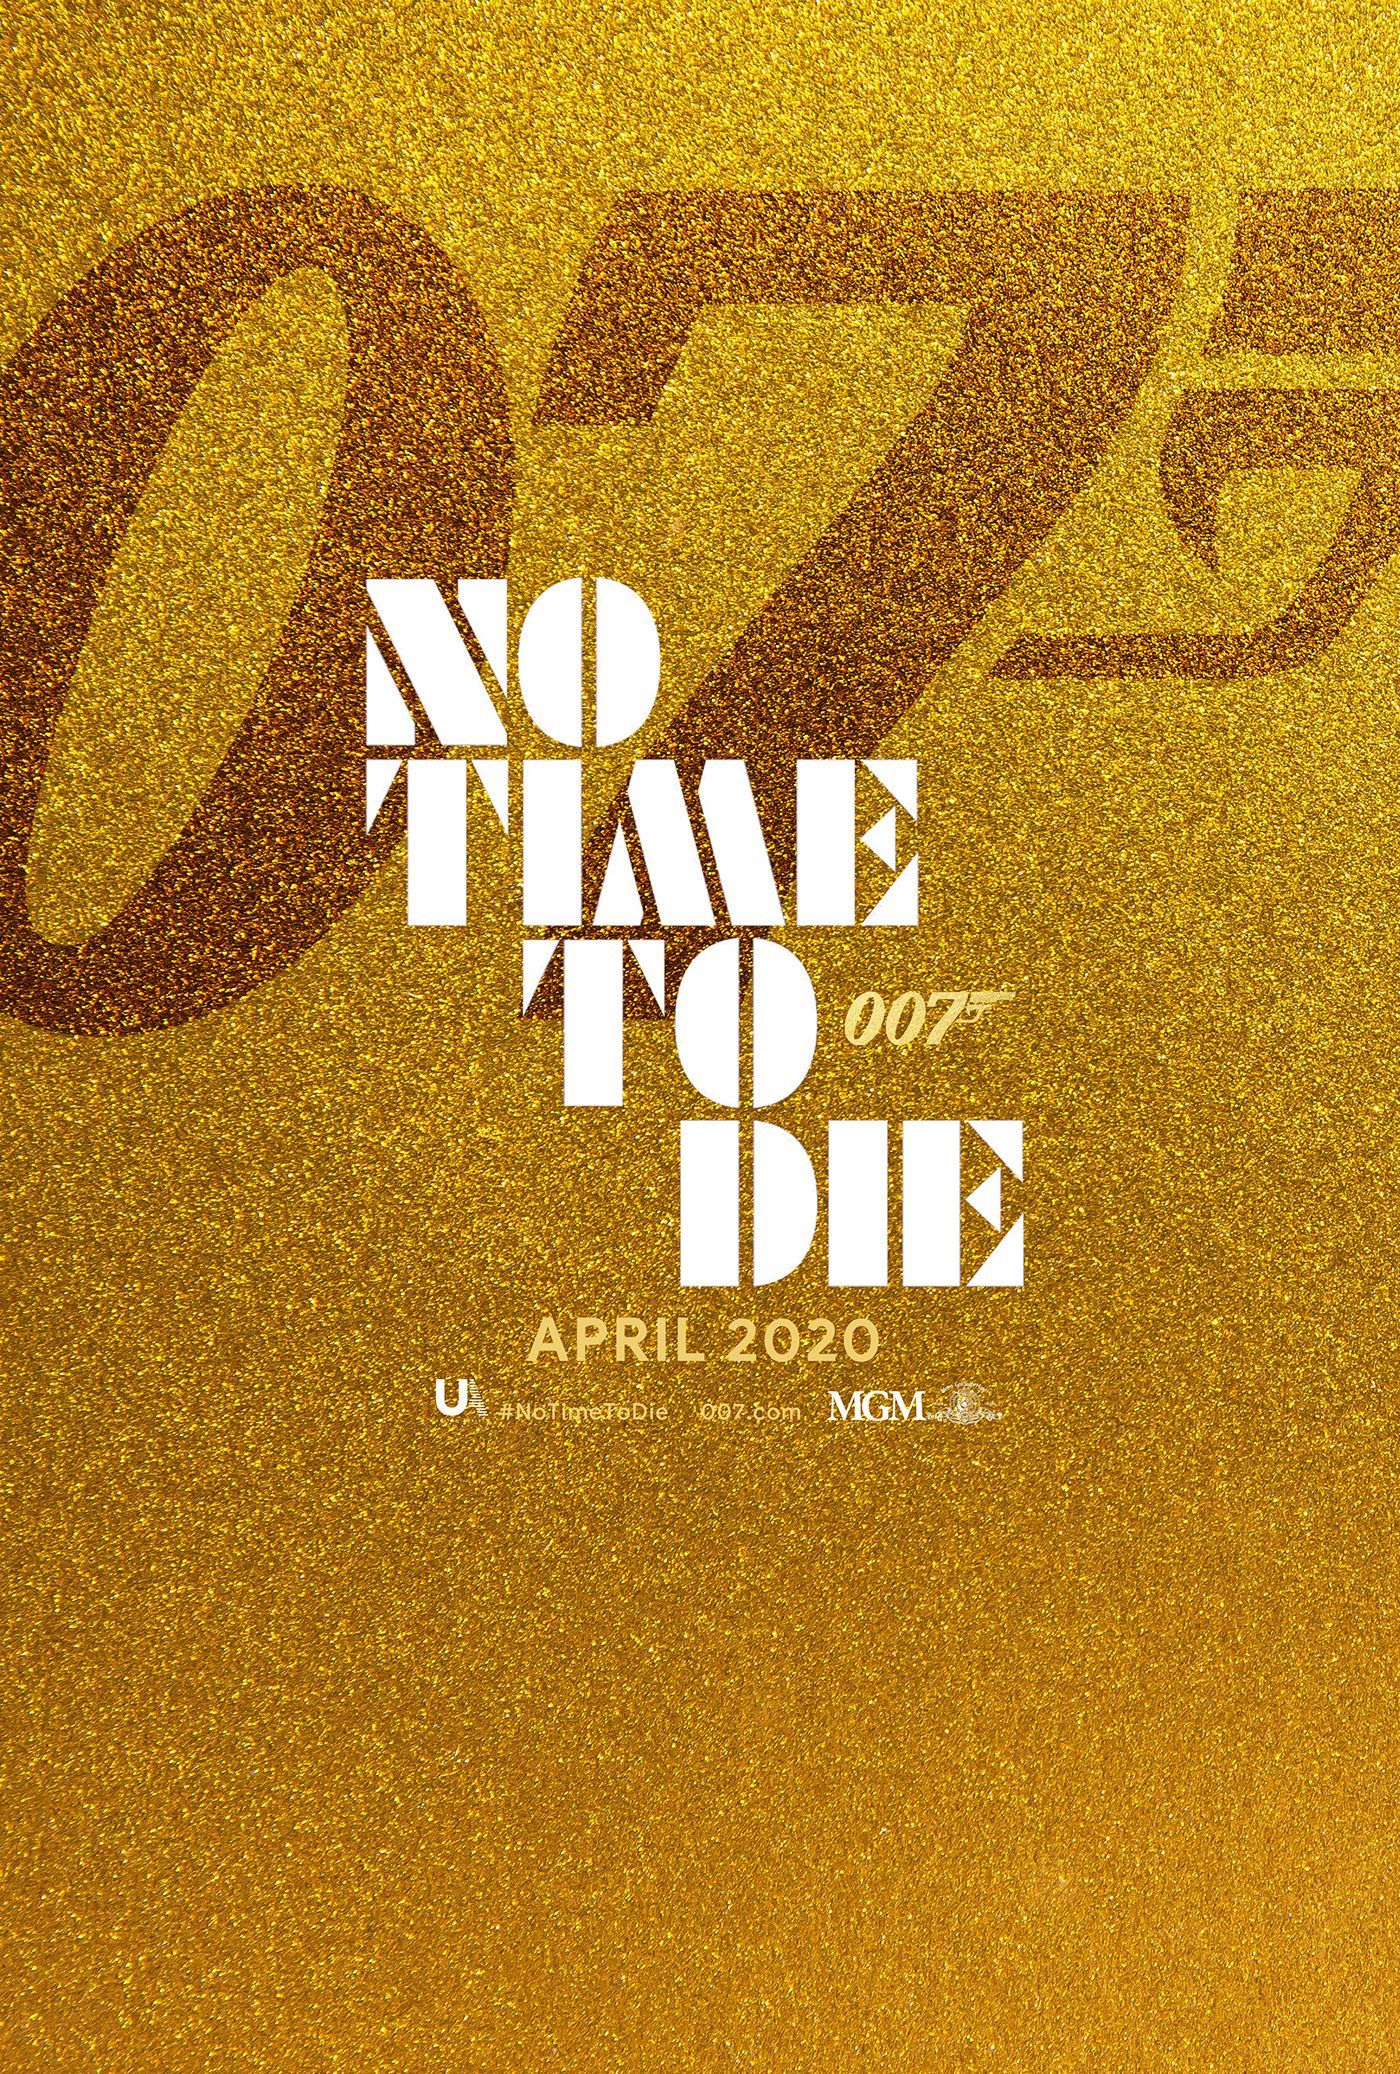 James Bond 007: No Time to Die. Poster Design. No time to die poster, James bond books, James bond